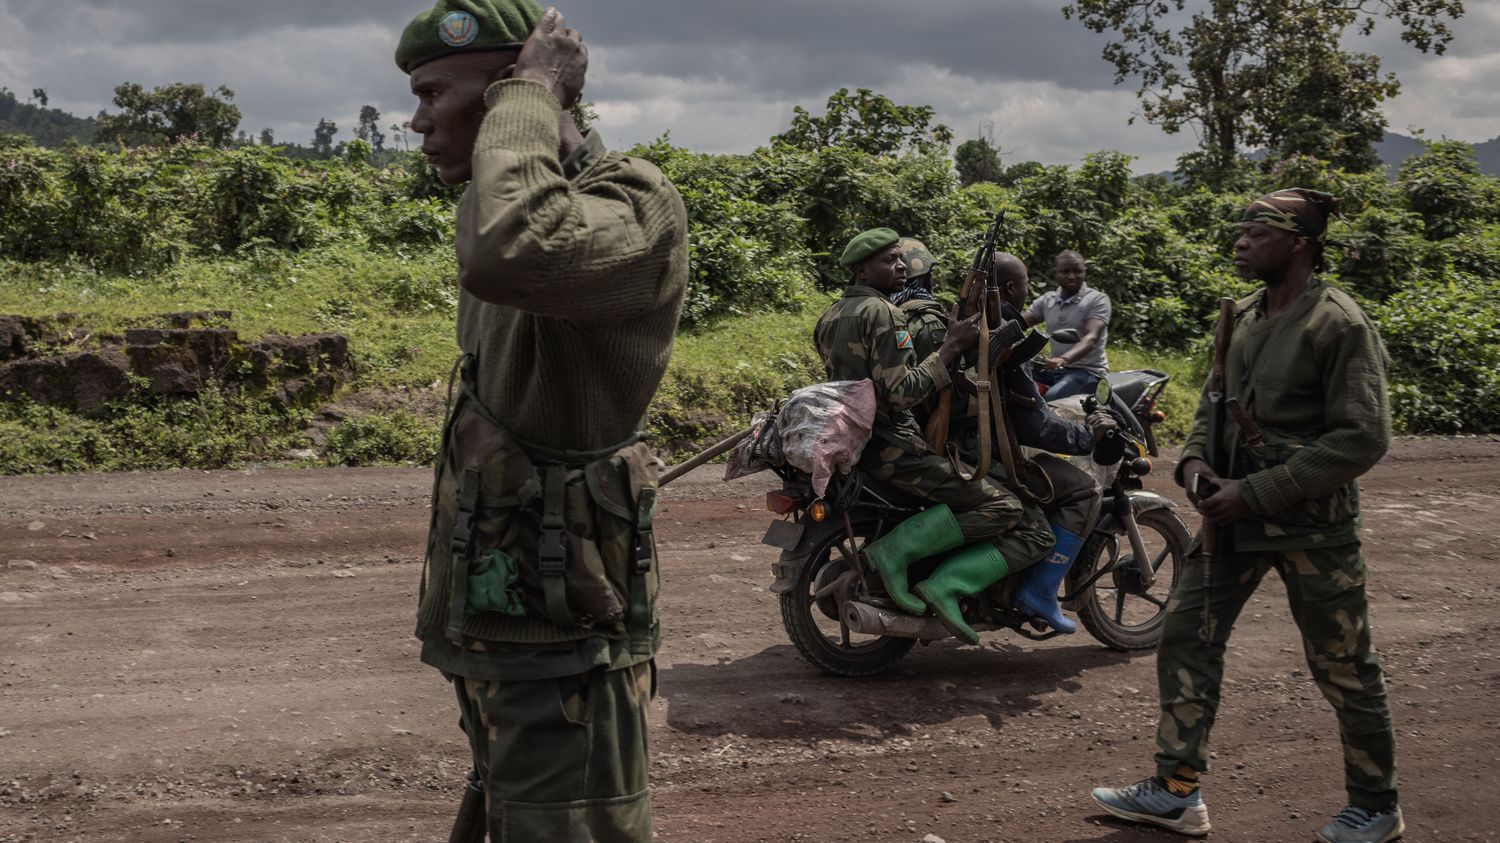 We explain the crisis between Rwanda and the Democratic Republic of Congo
